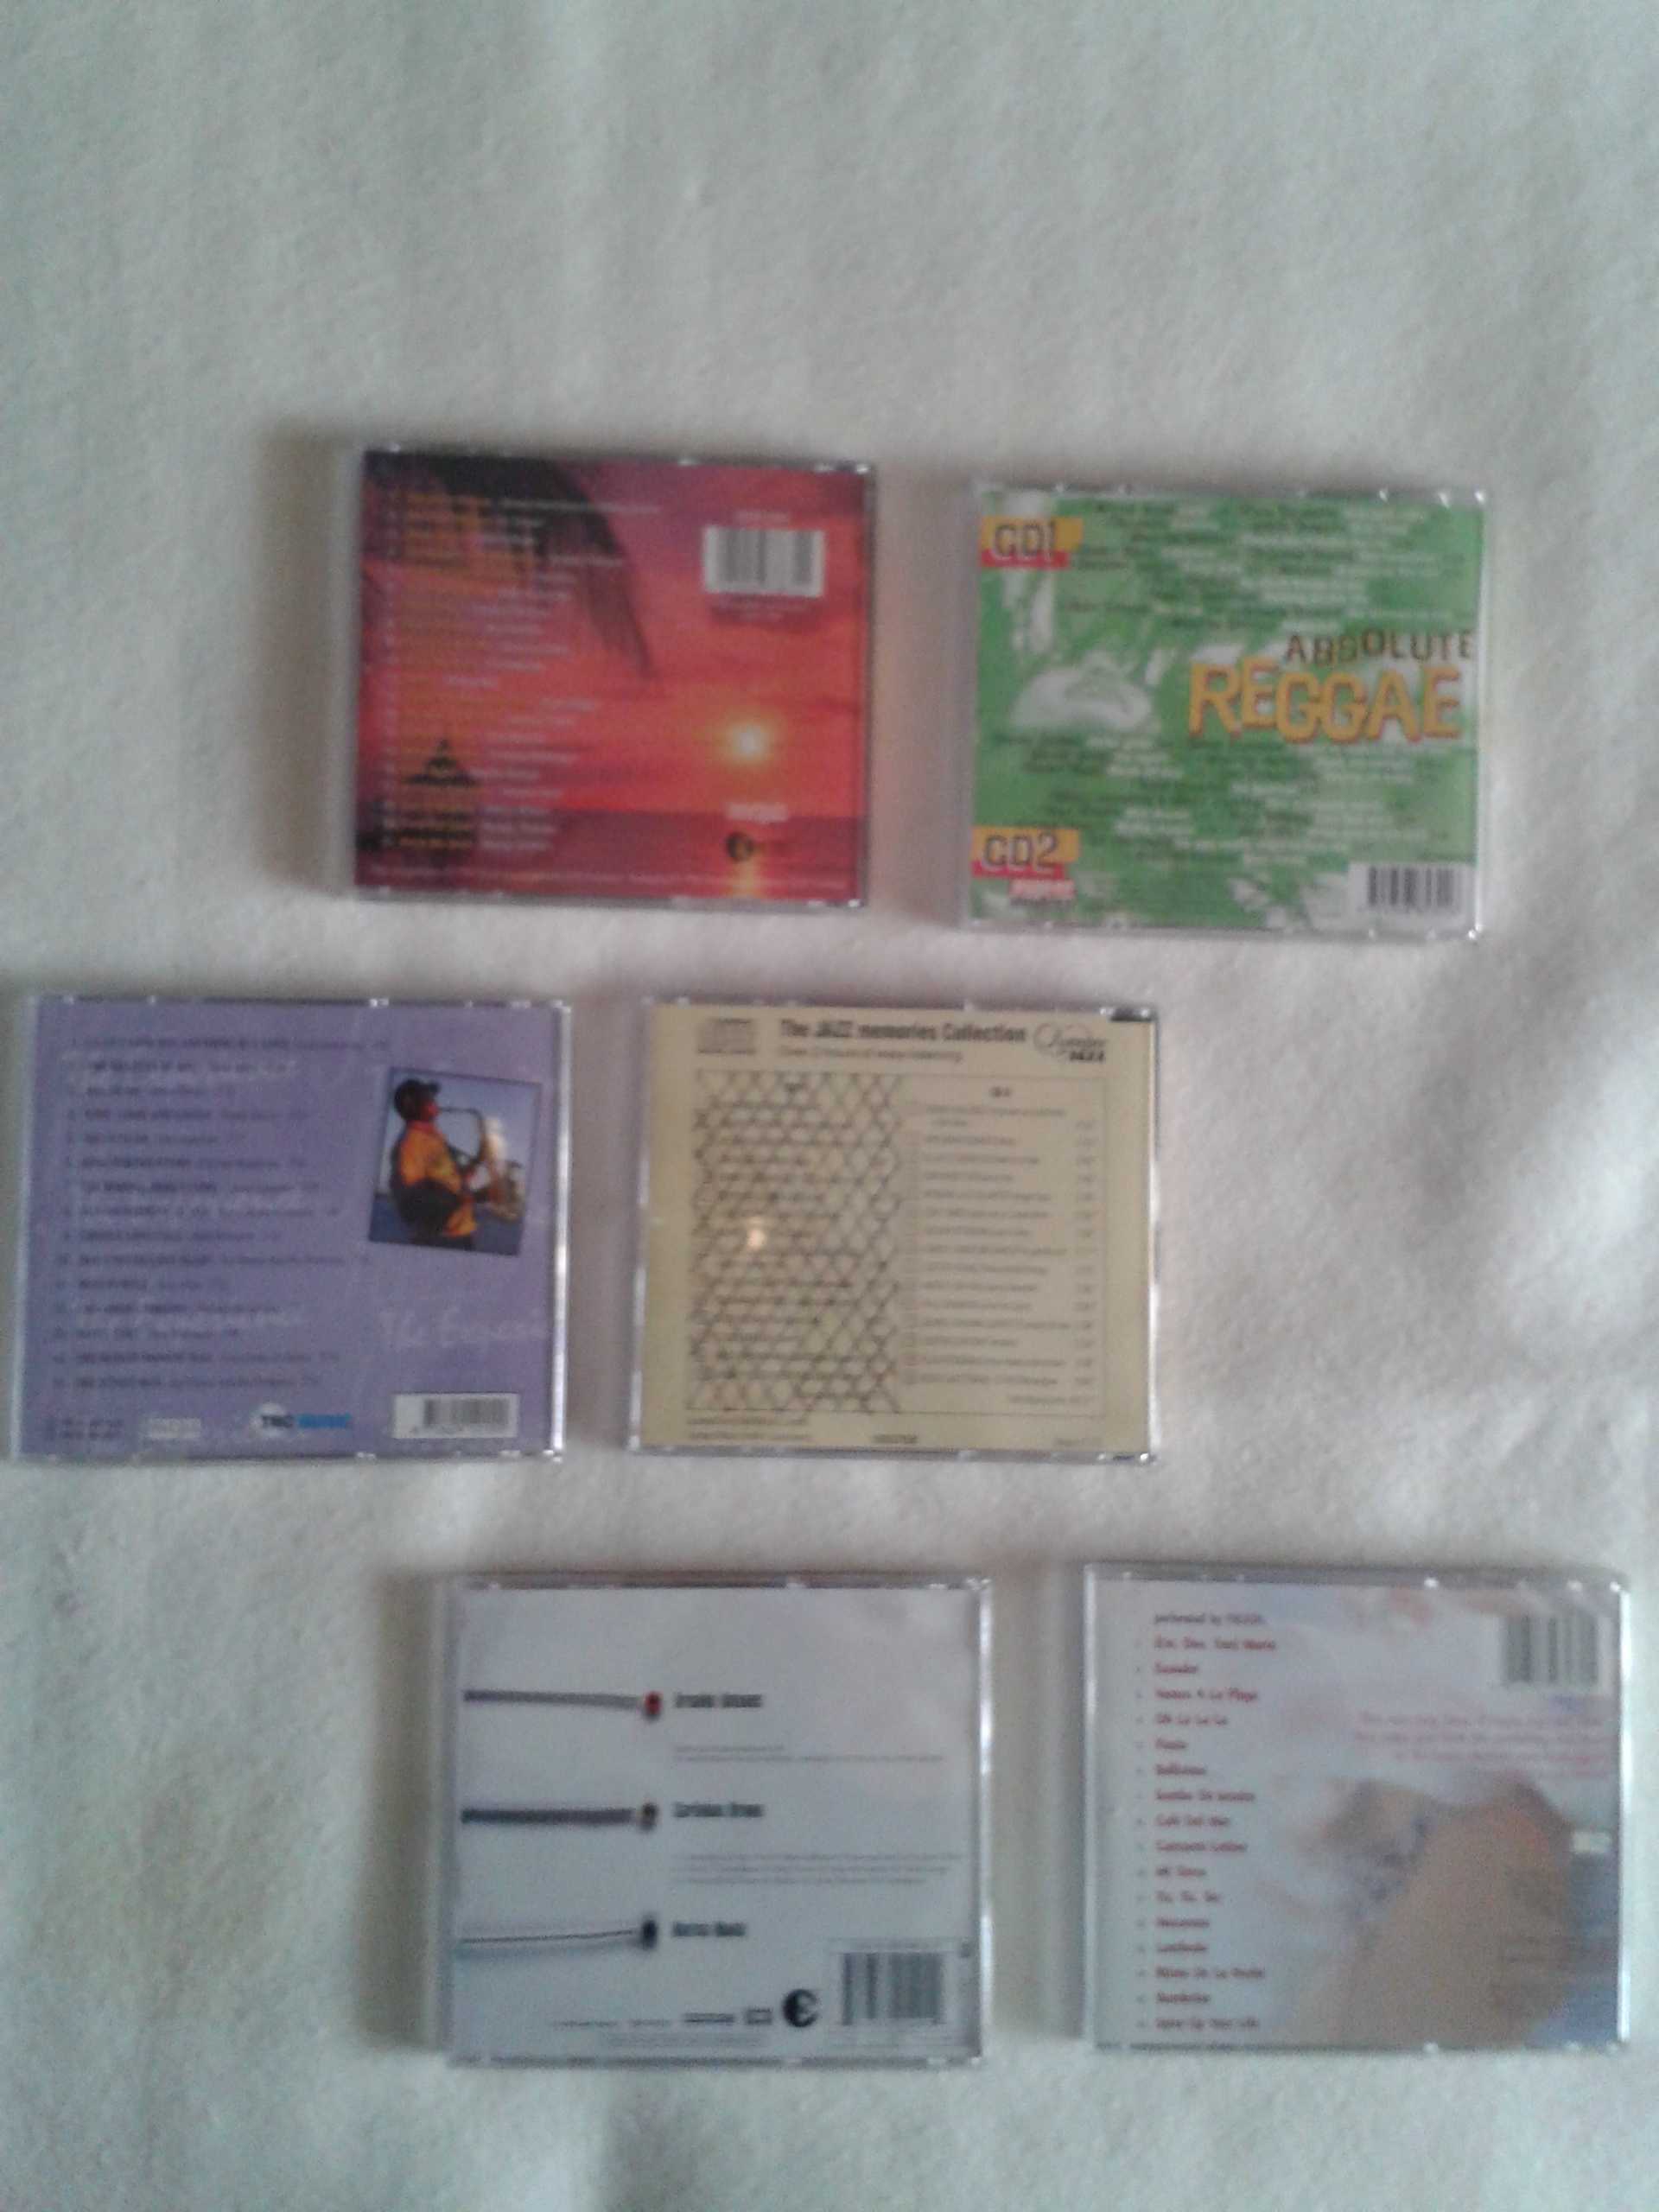 DISCOS CD música reggae, jazz, brasileira, latina